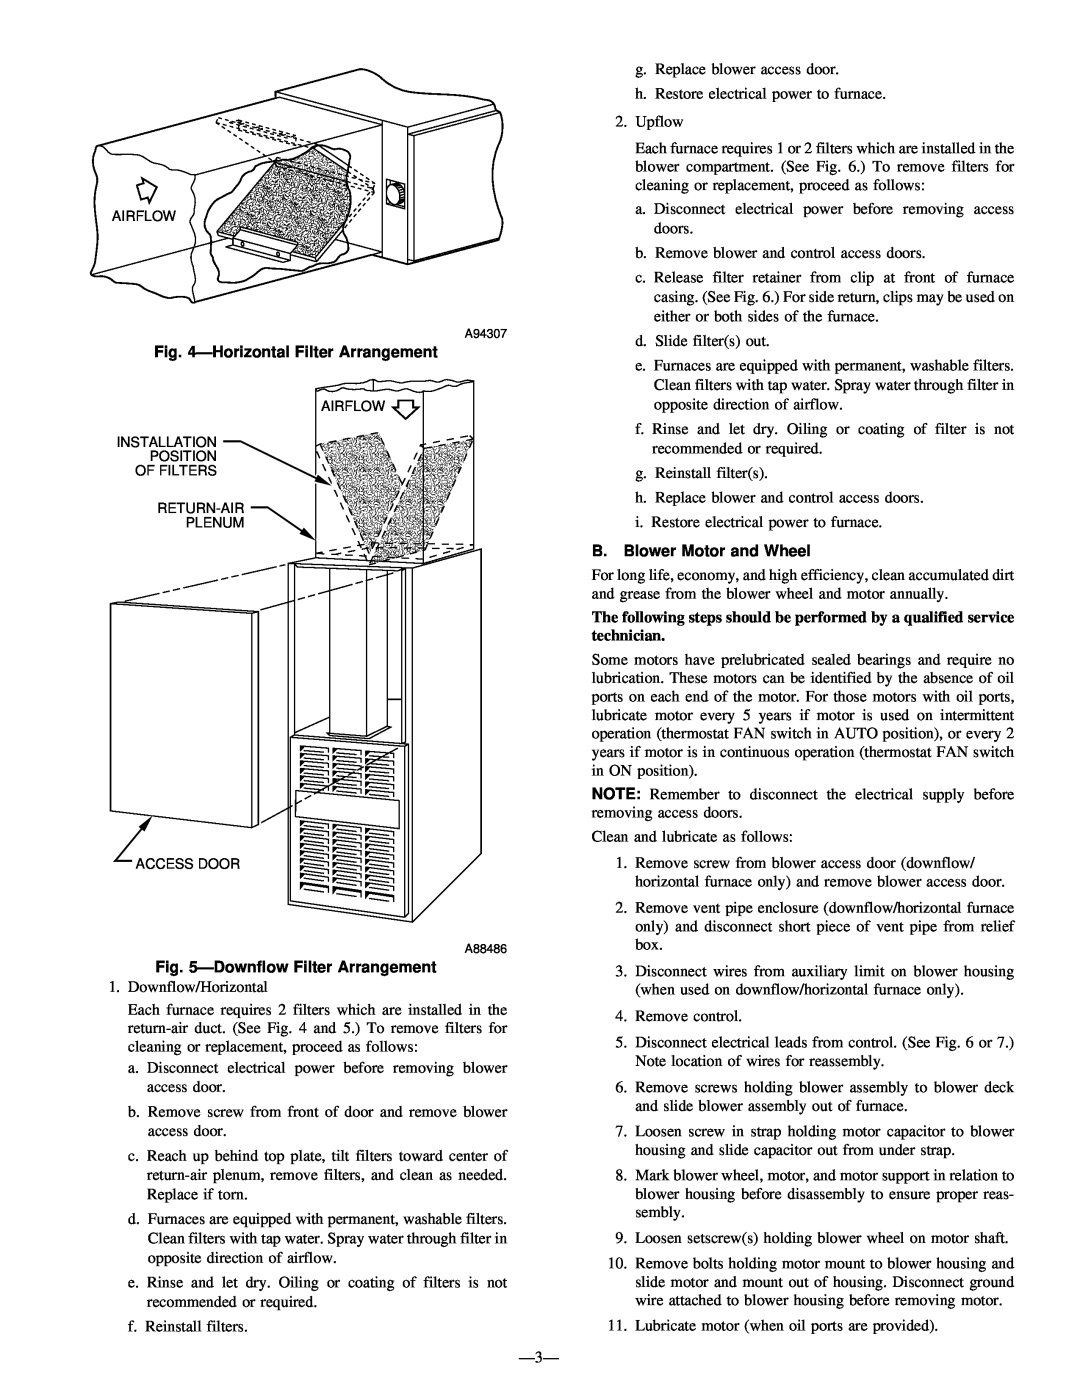 Bryant 383KAV instruction manual ÐHorizontal Filter Arrangement, ÐDownflow Filter Arrangement, B. Blower Motor and Wheel 